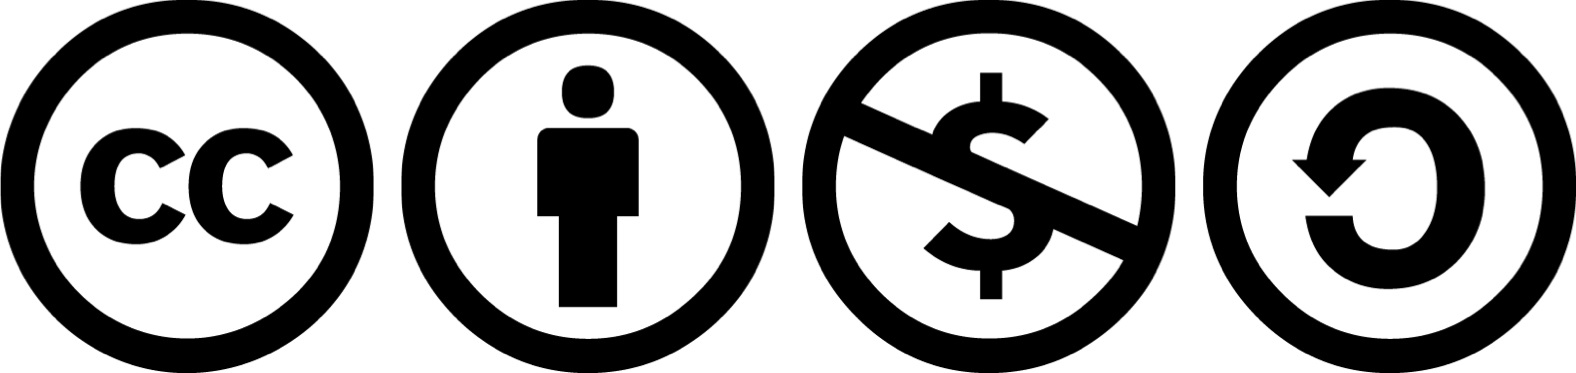 creative commons symbol small